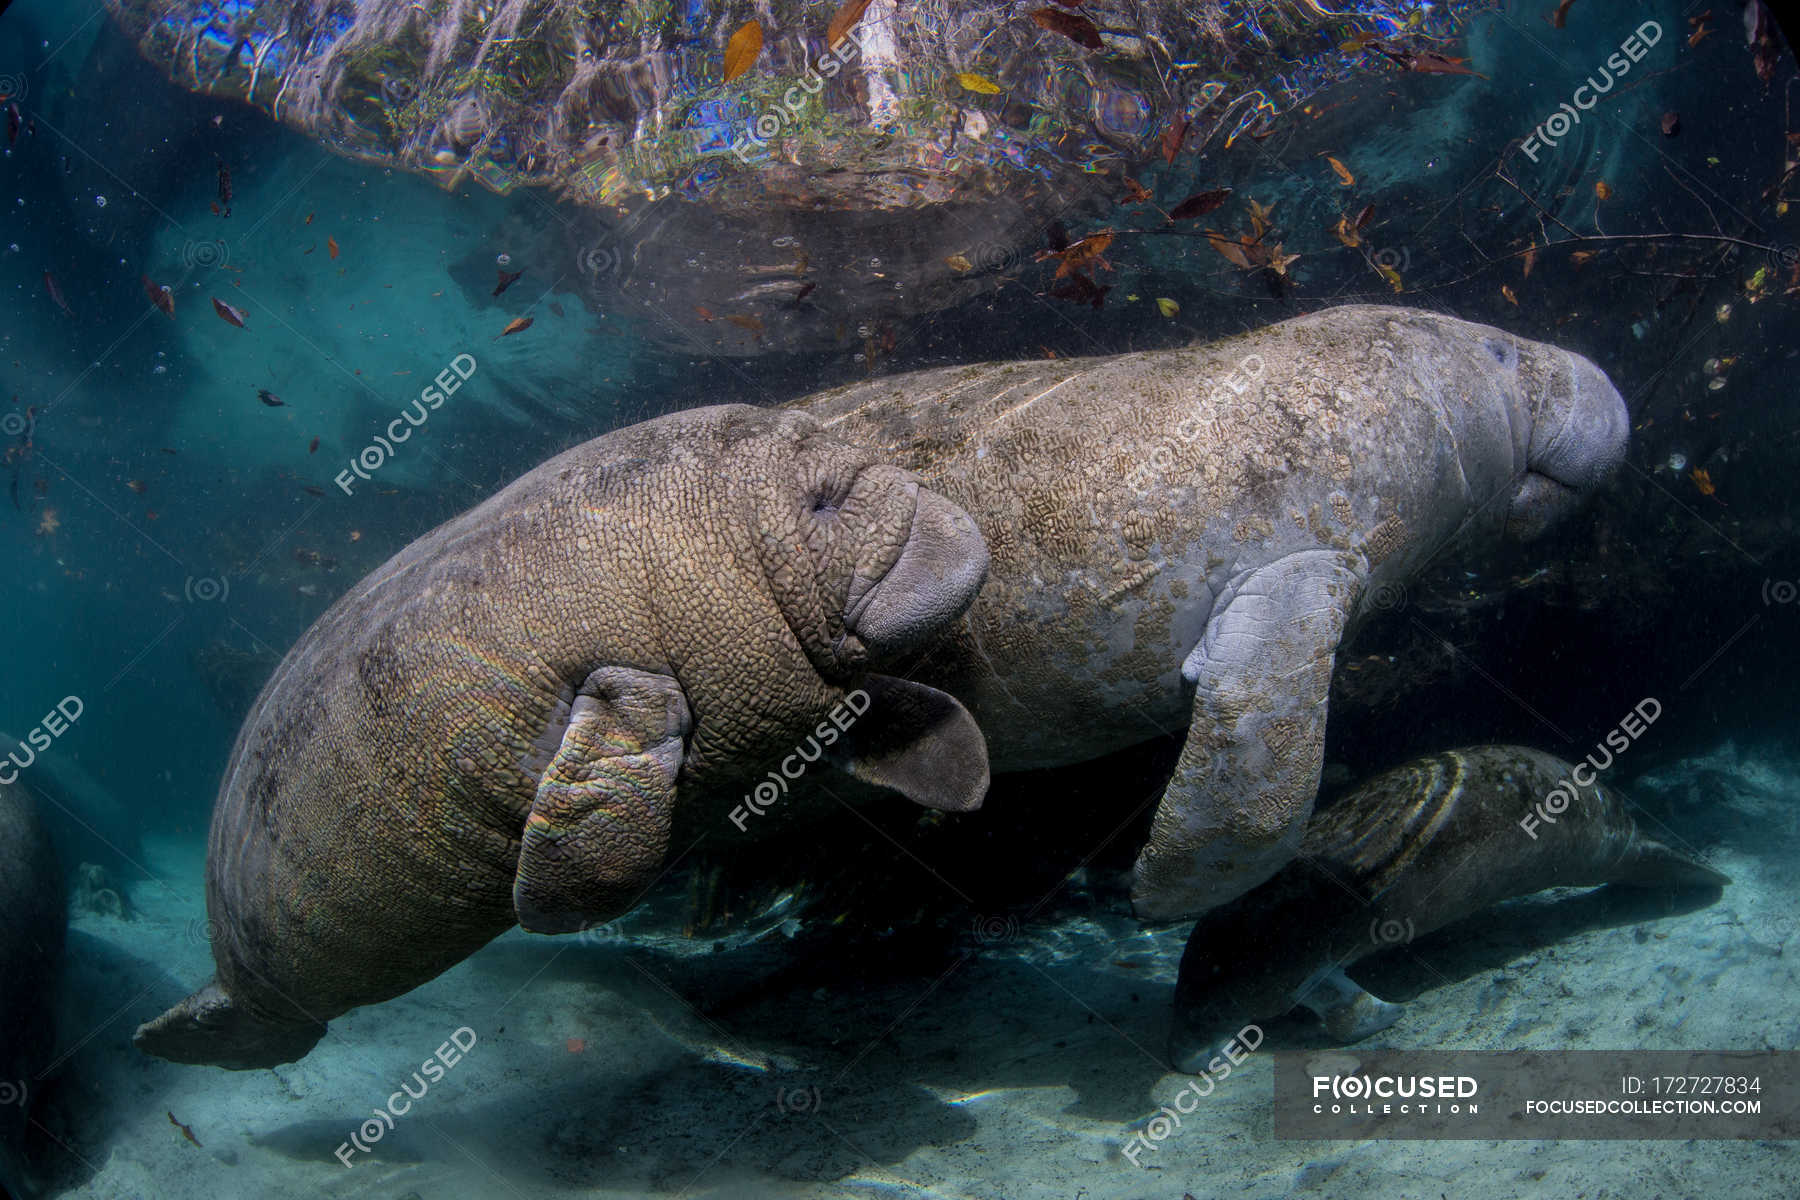 Sea manatees floating under water — mammals, sea cows - Stock Photo |  #172727834